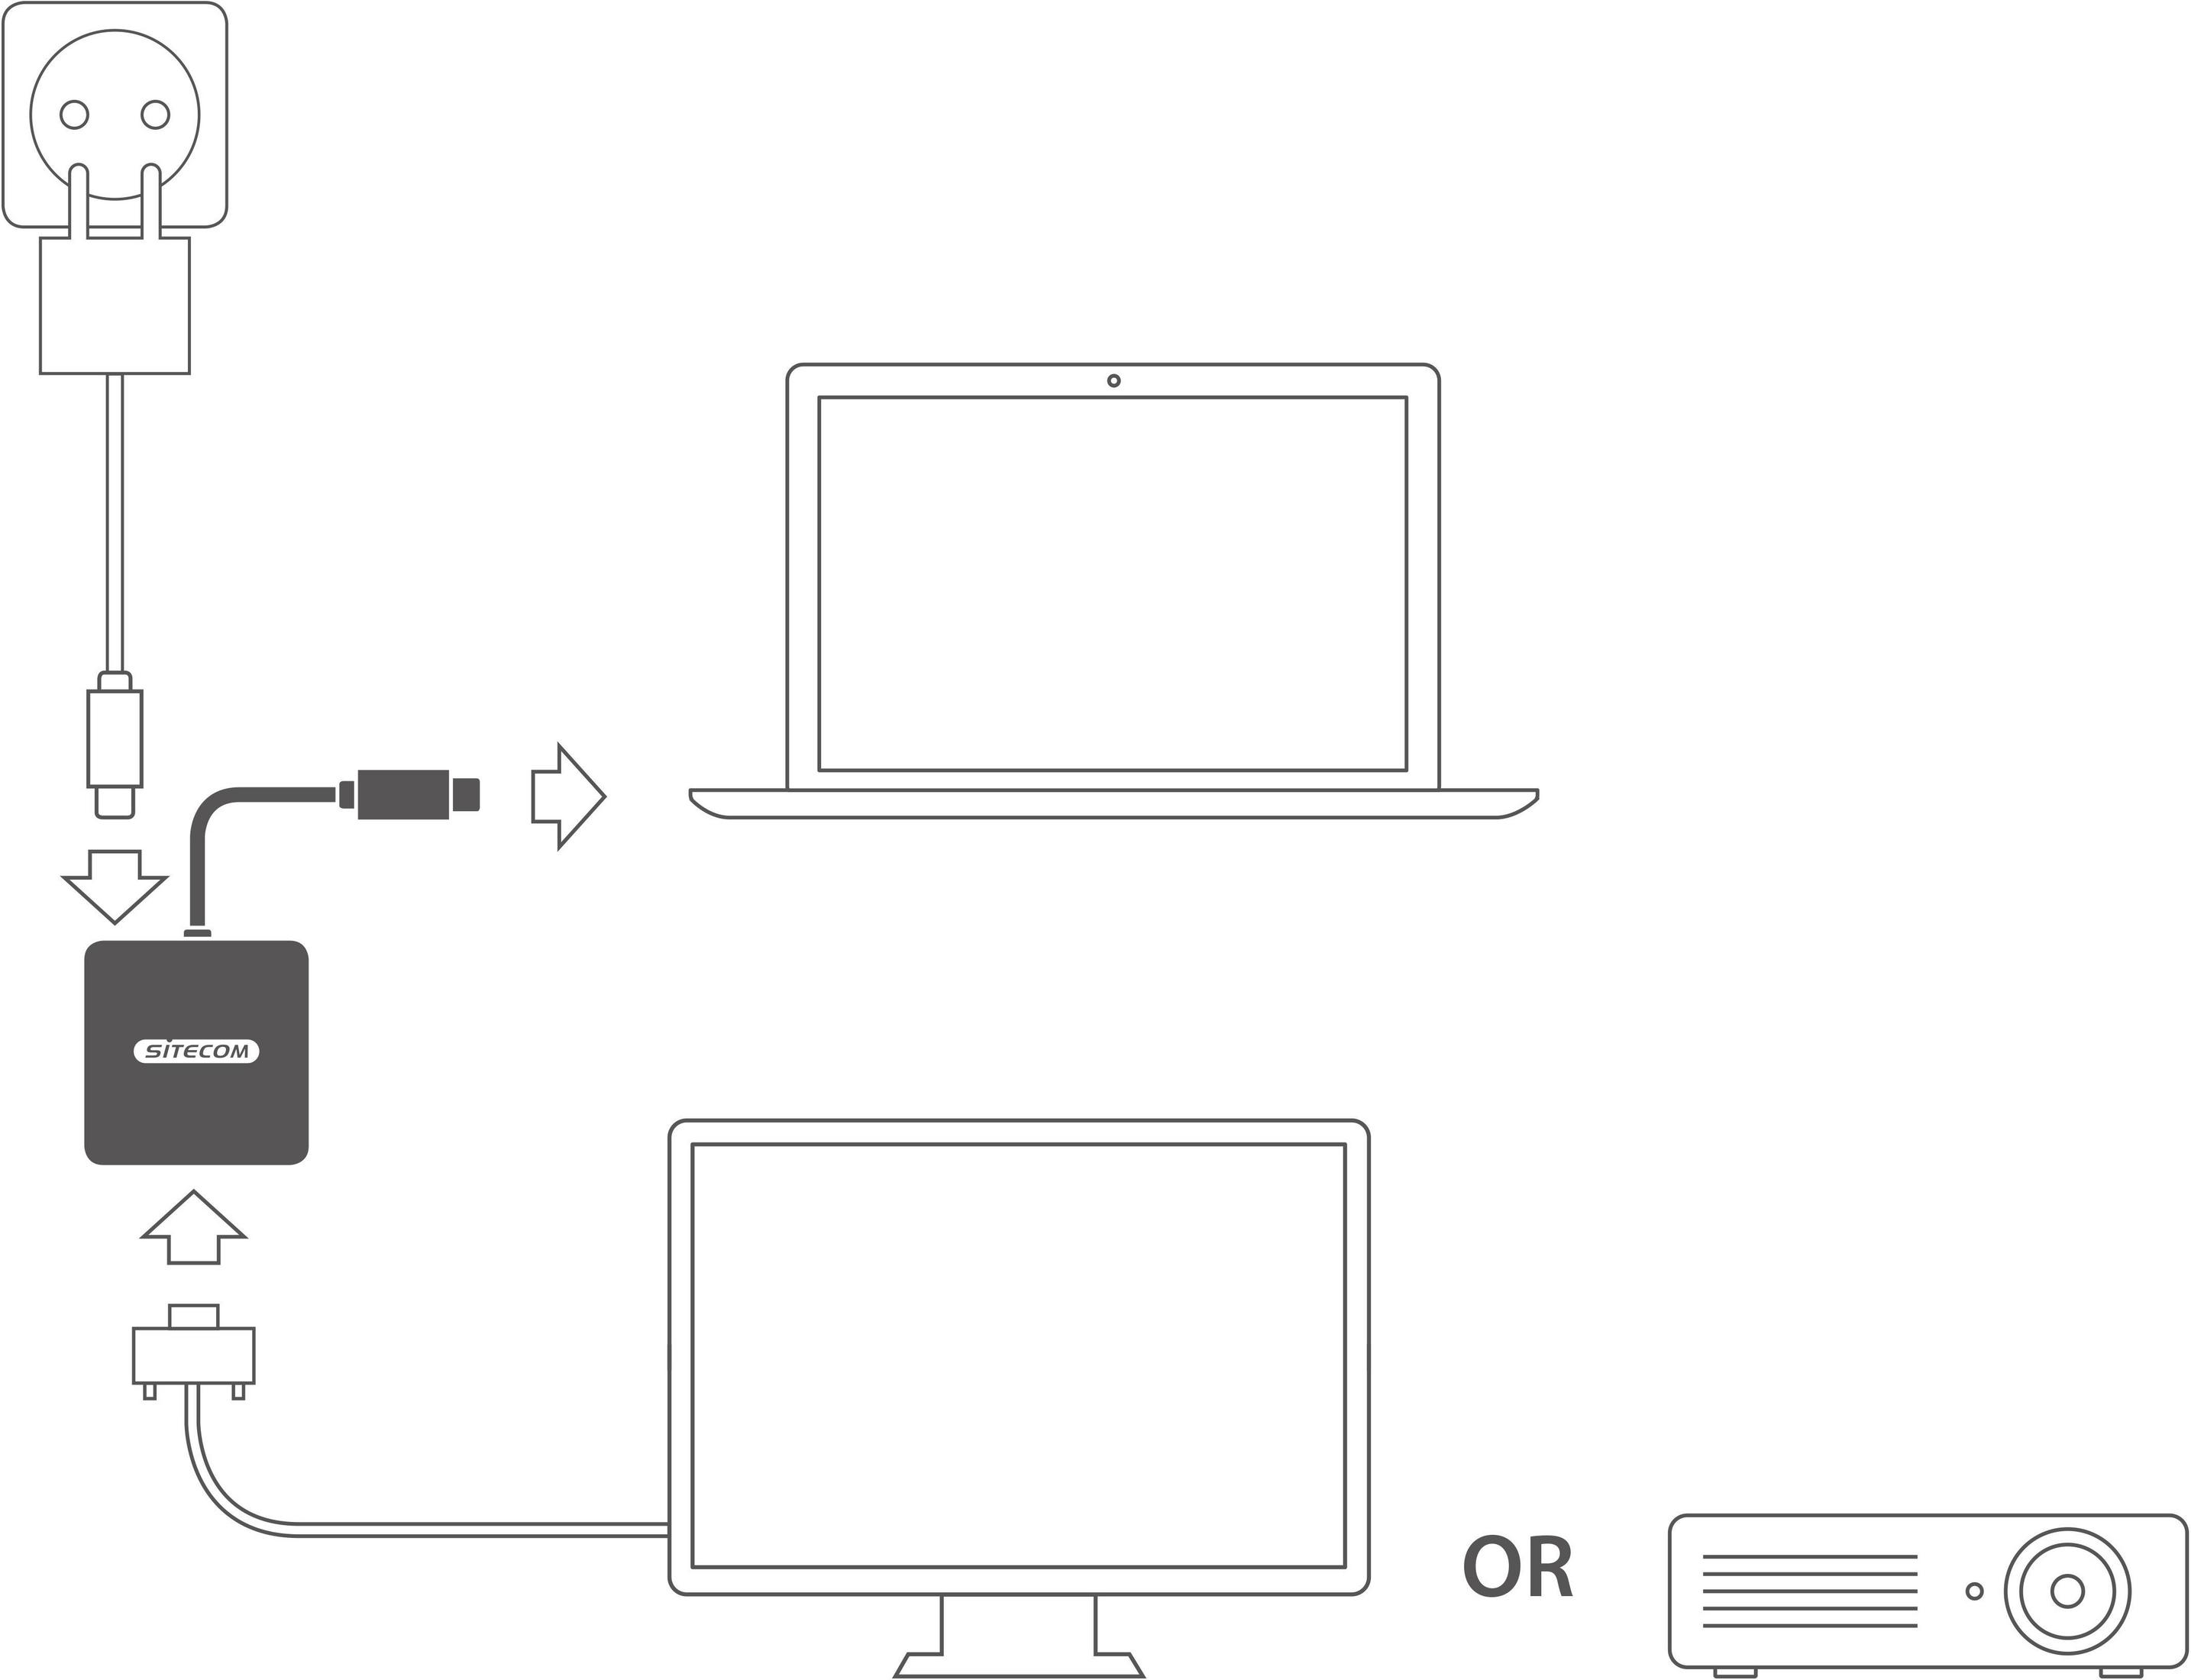 SITECOM CN-375 USB-C 3.1 USB Adapter, ADA.POWSUP HDMI TO zu Silber USB HDMI Adapter